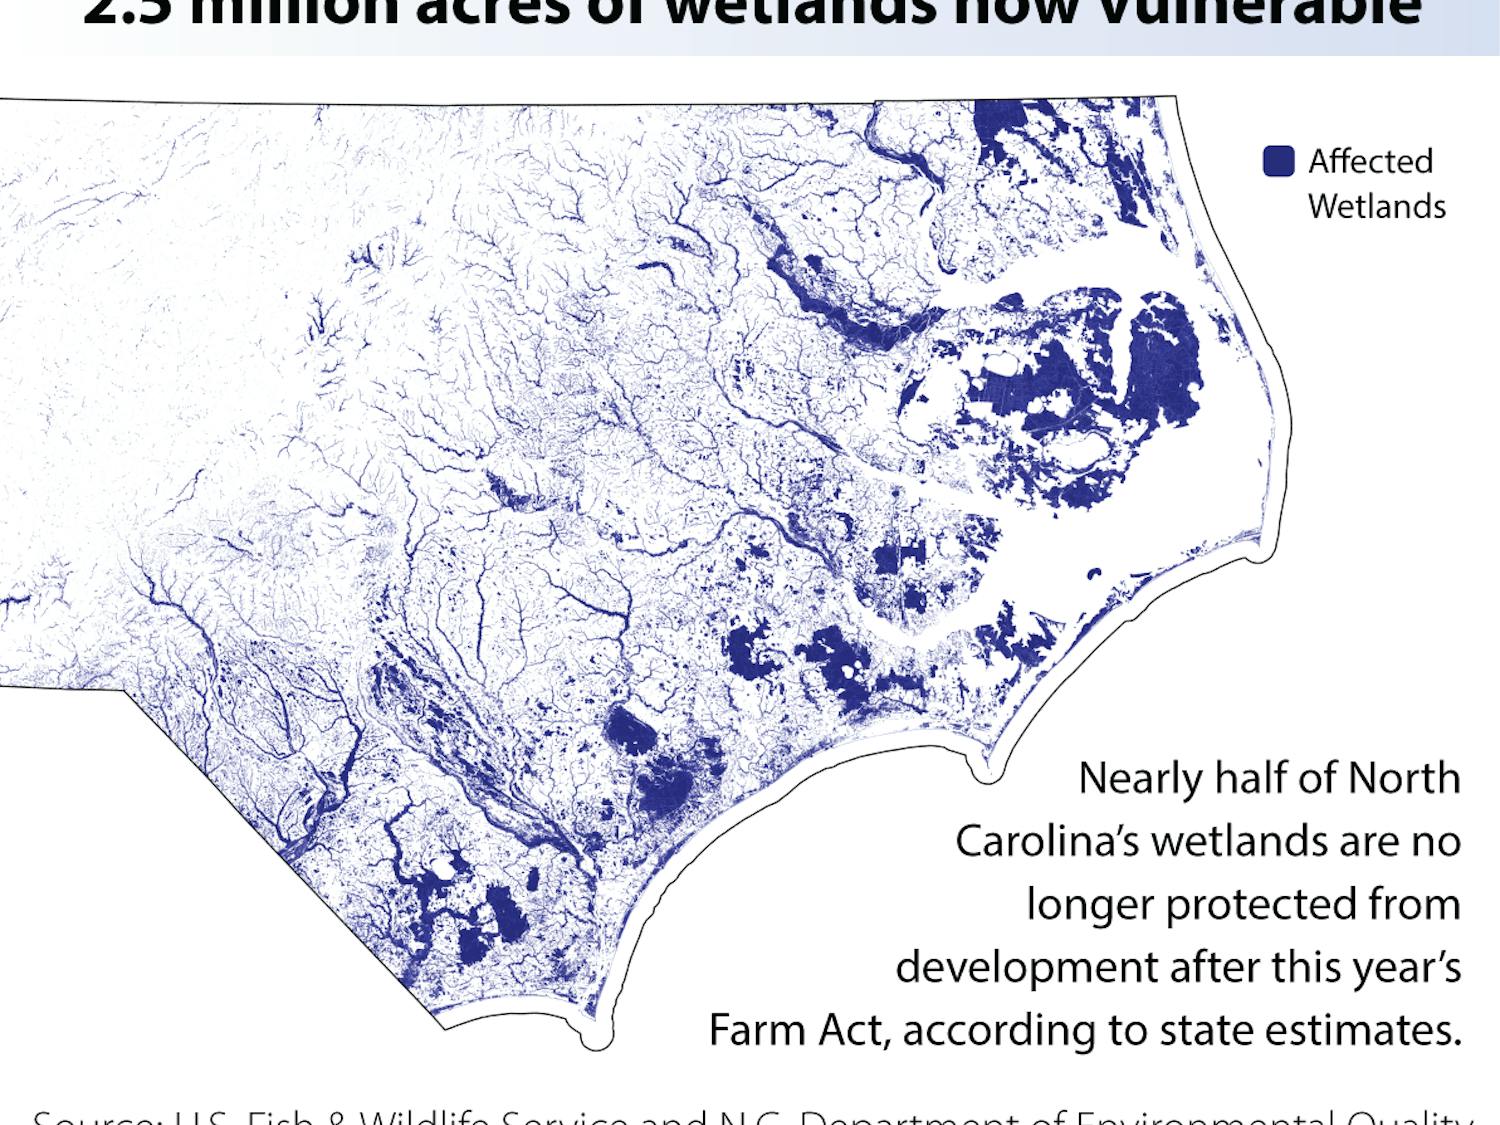 Visualization: 2.5 million acres of wetlands now vulnerable